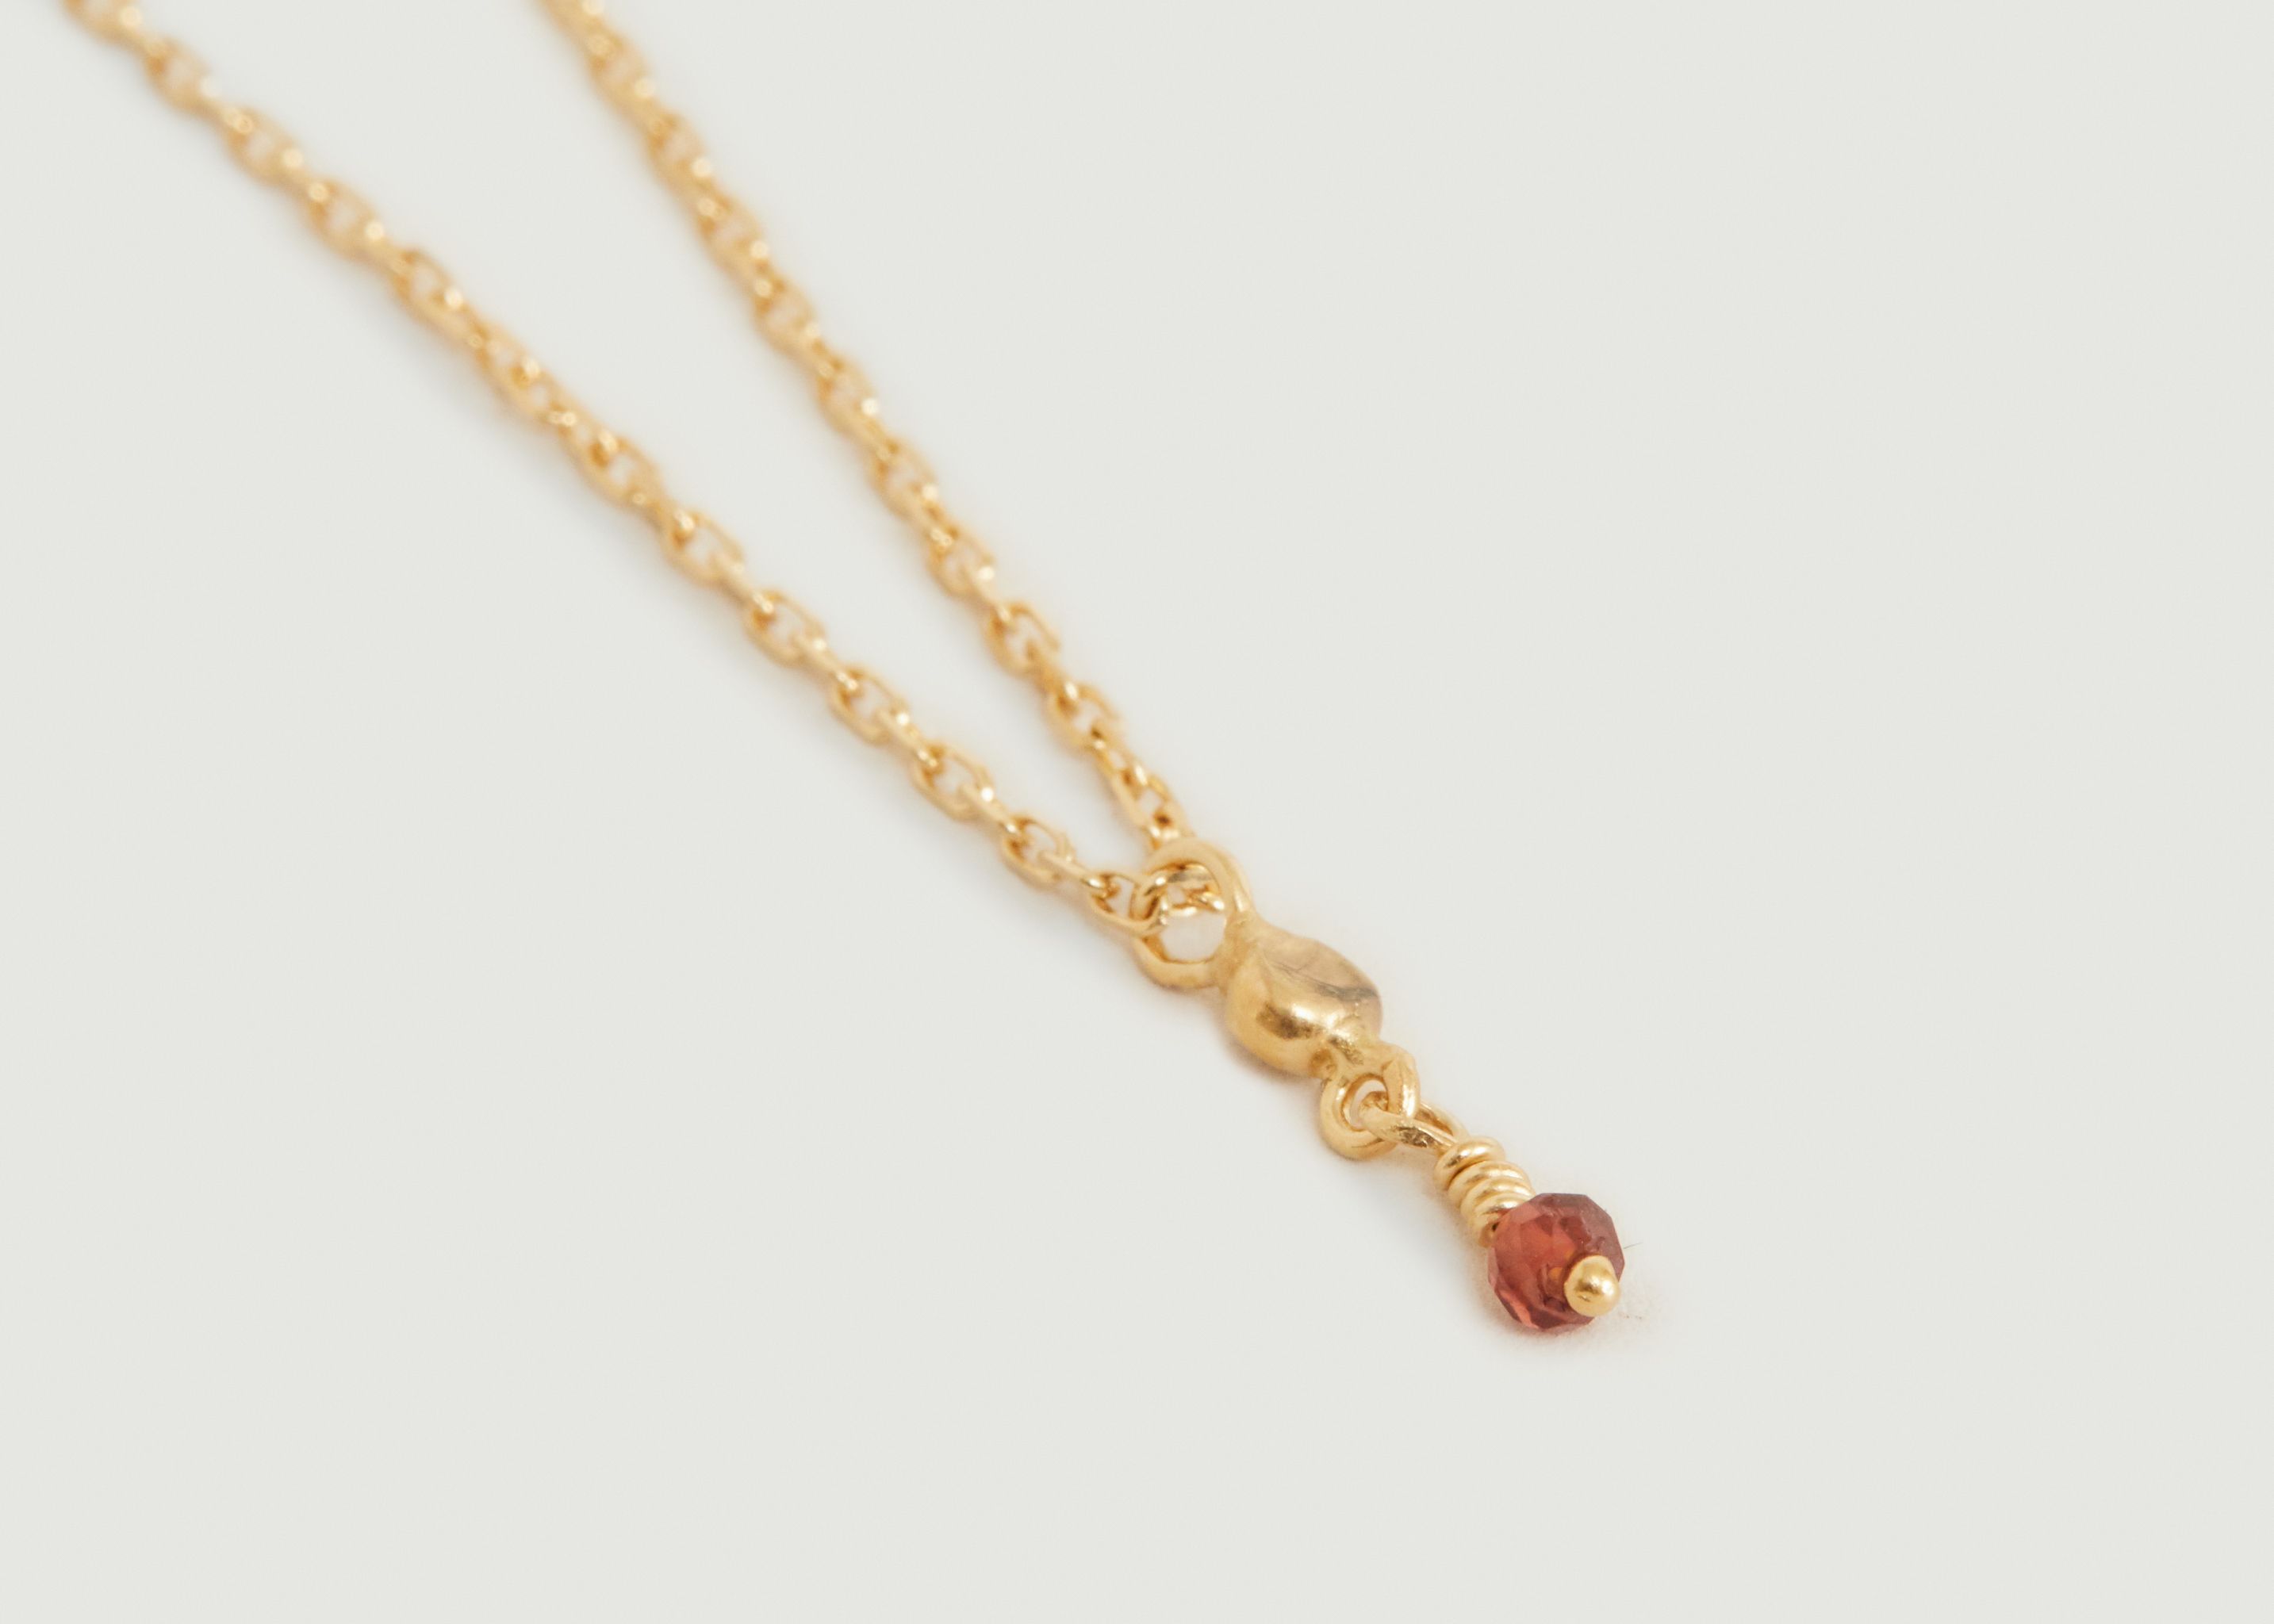 Tia chain necklace with pendant - Monsieur